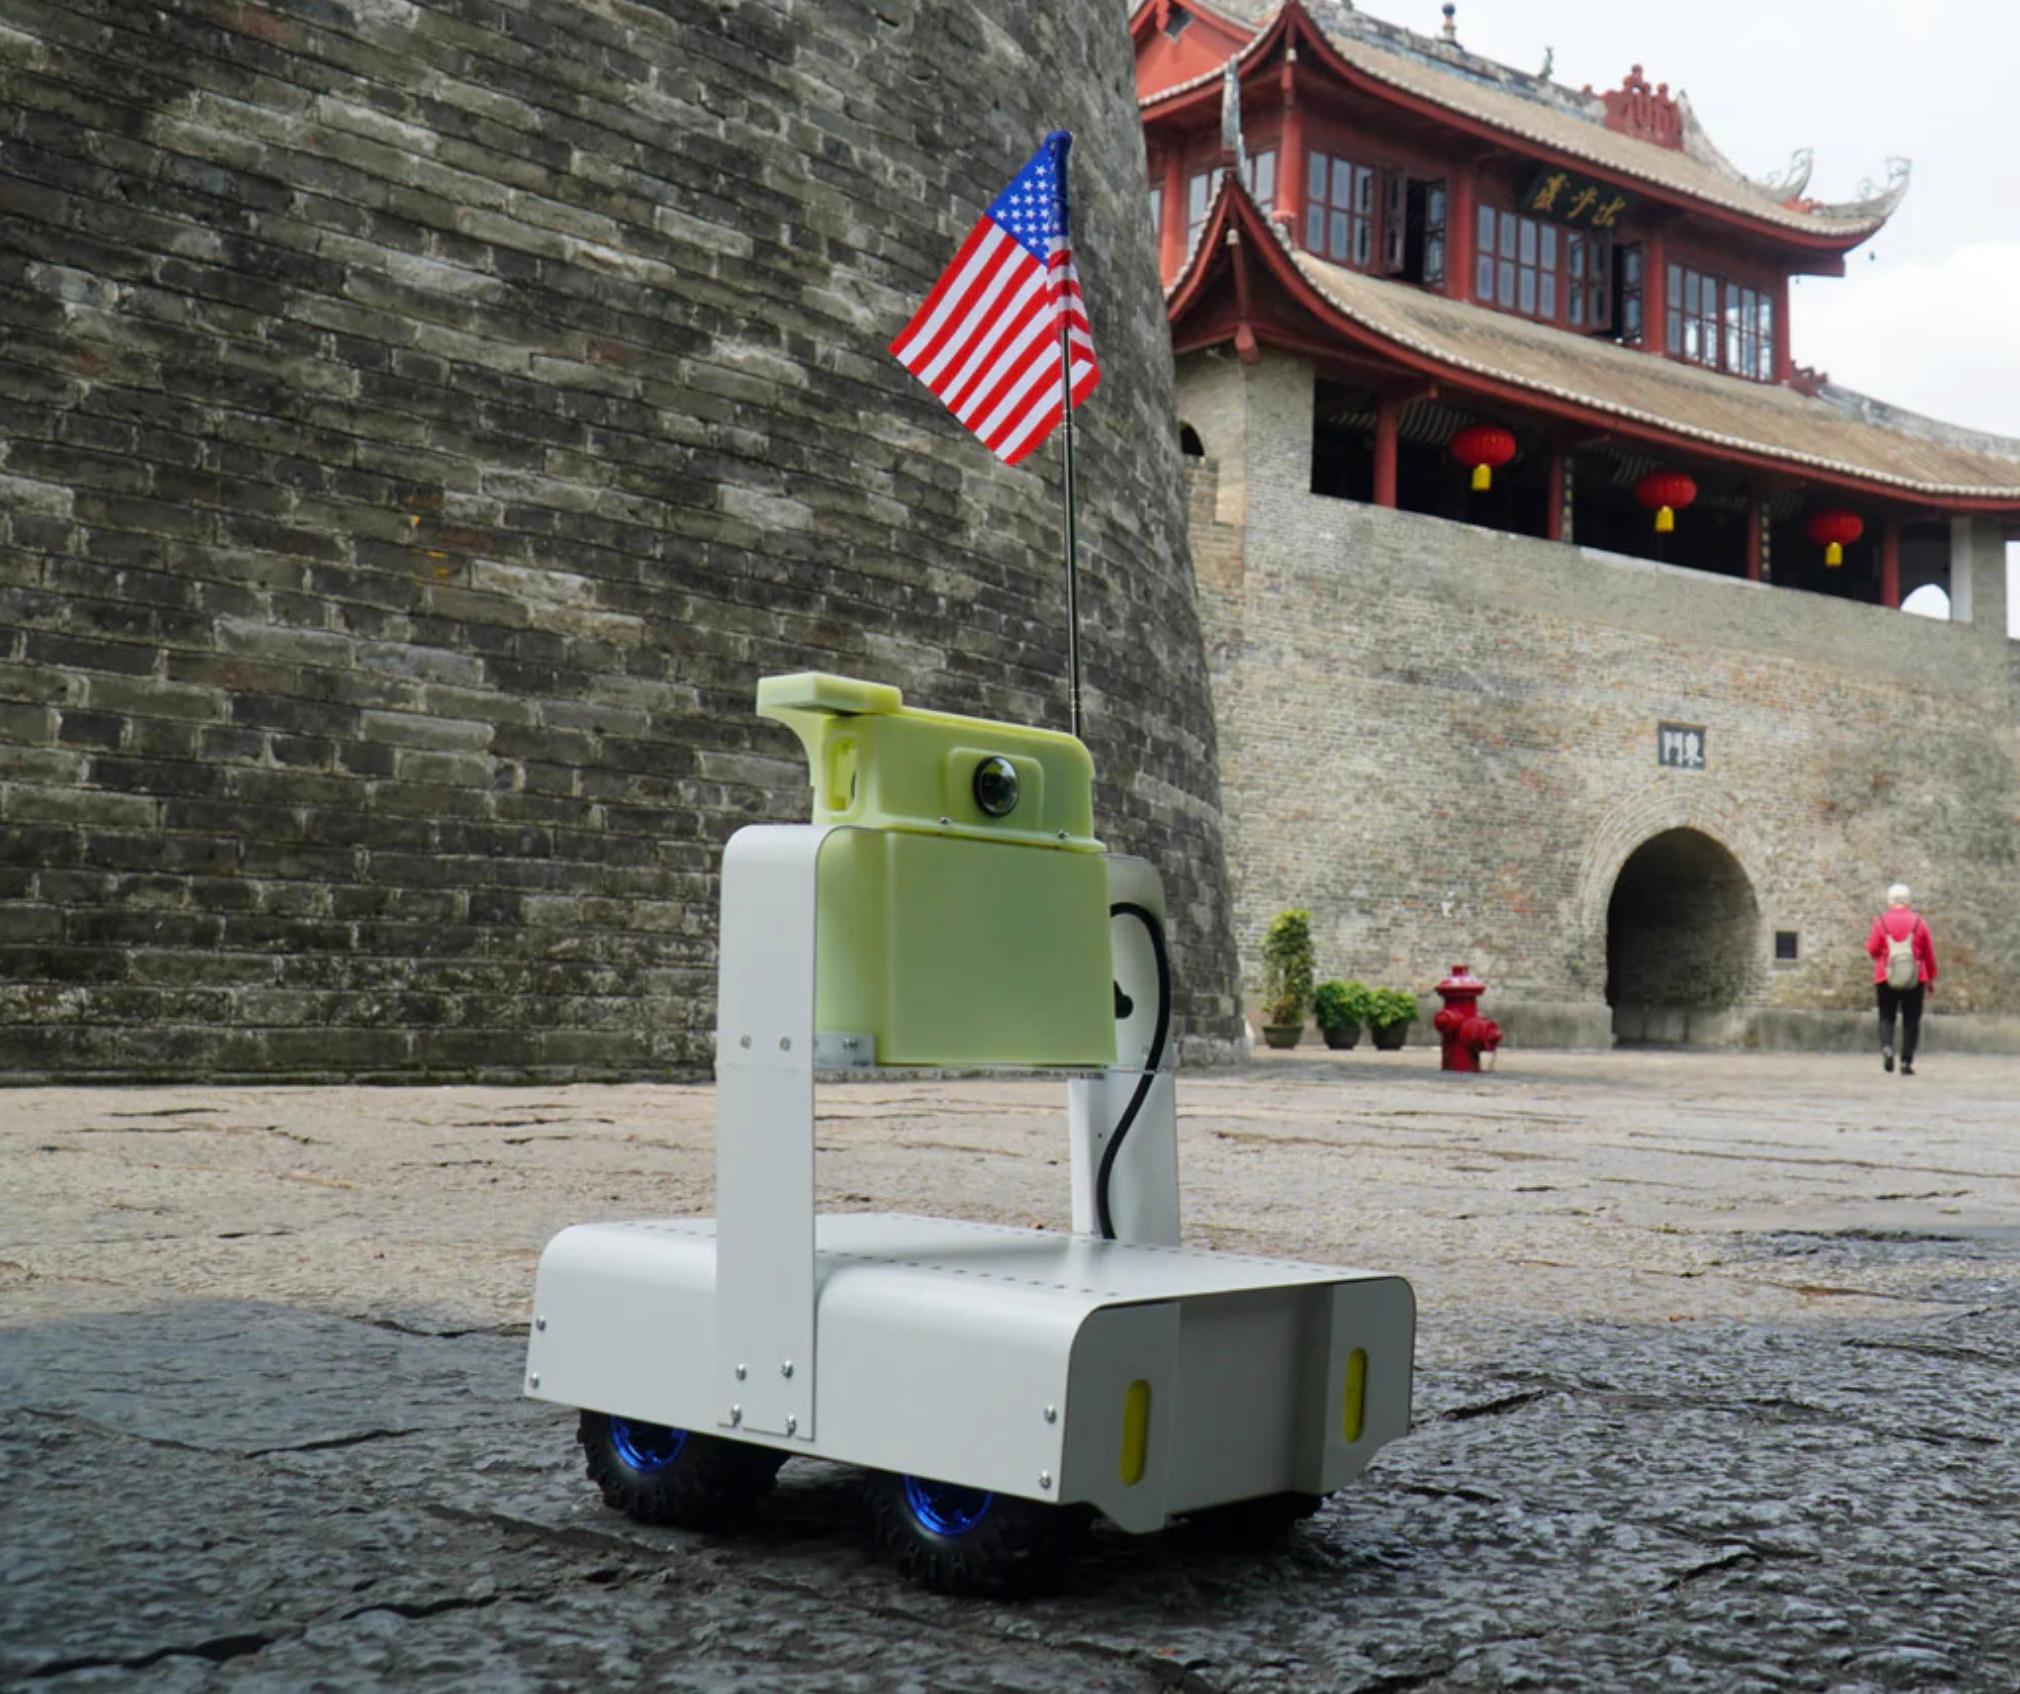 Building a decentralized network of sidewalk robots